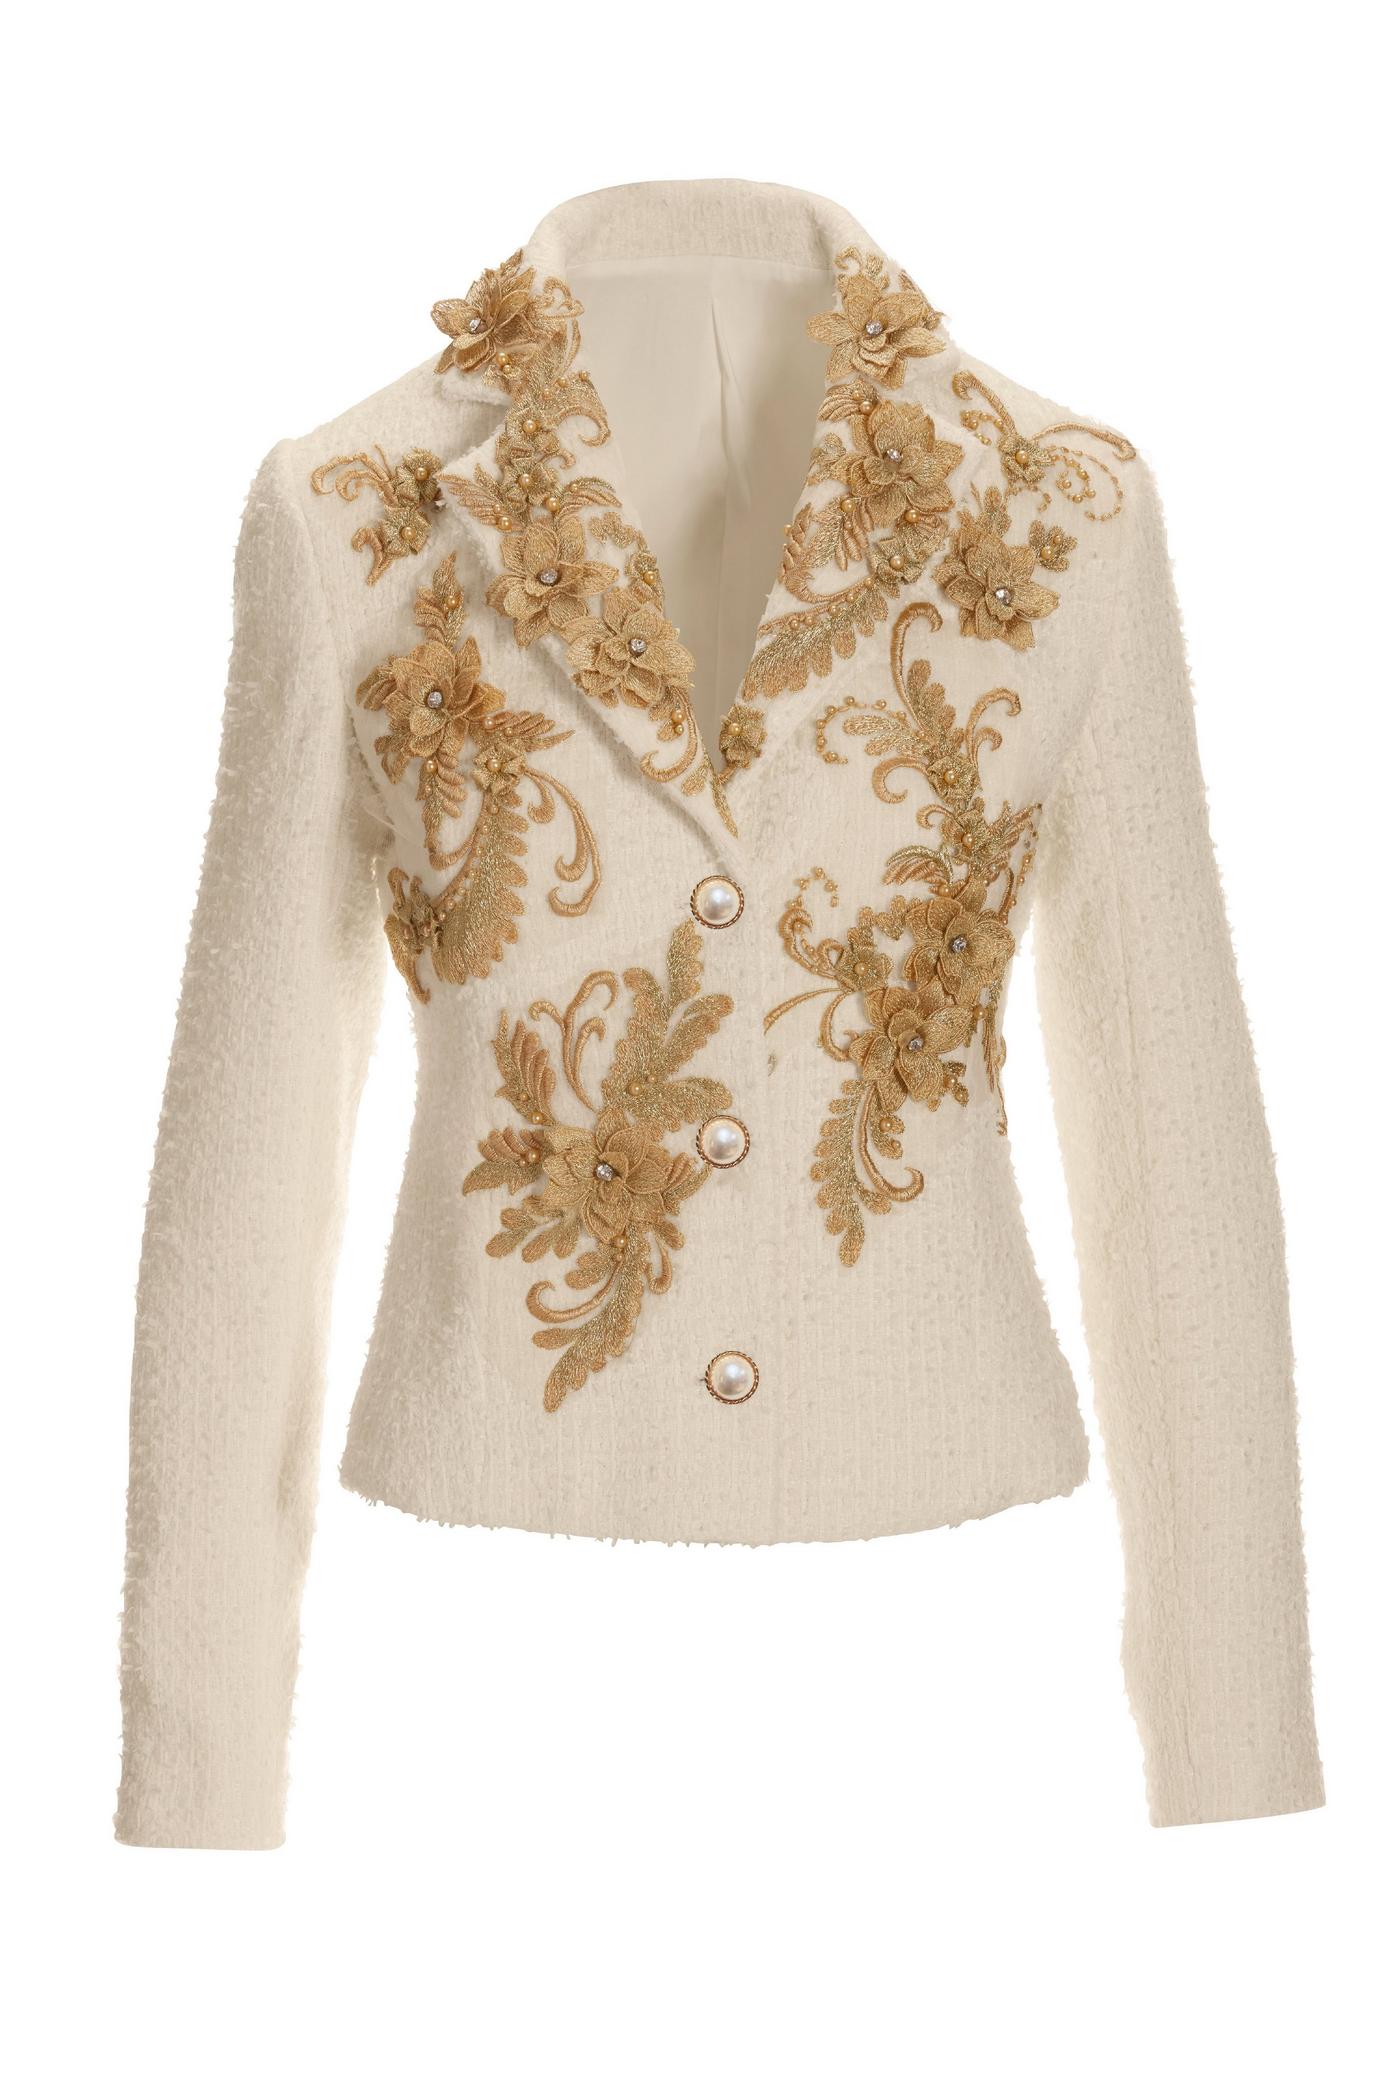 Metallic Floral Appliqu Tweed Parisian Jacket - Off White/Gold 